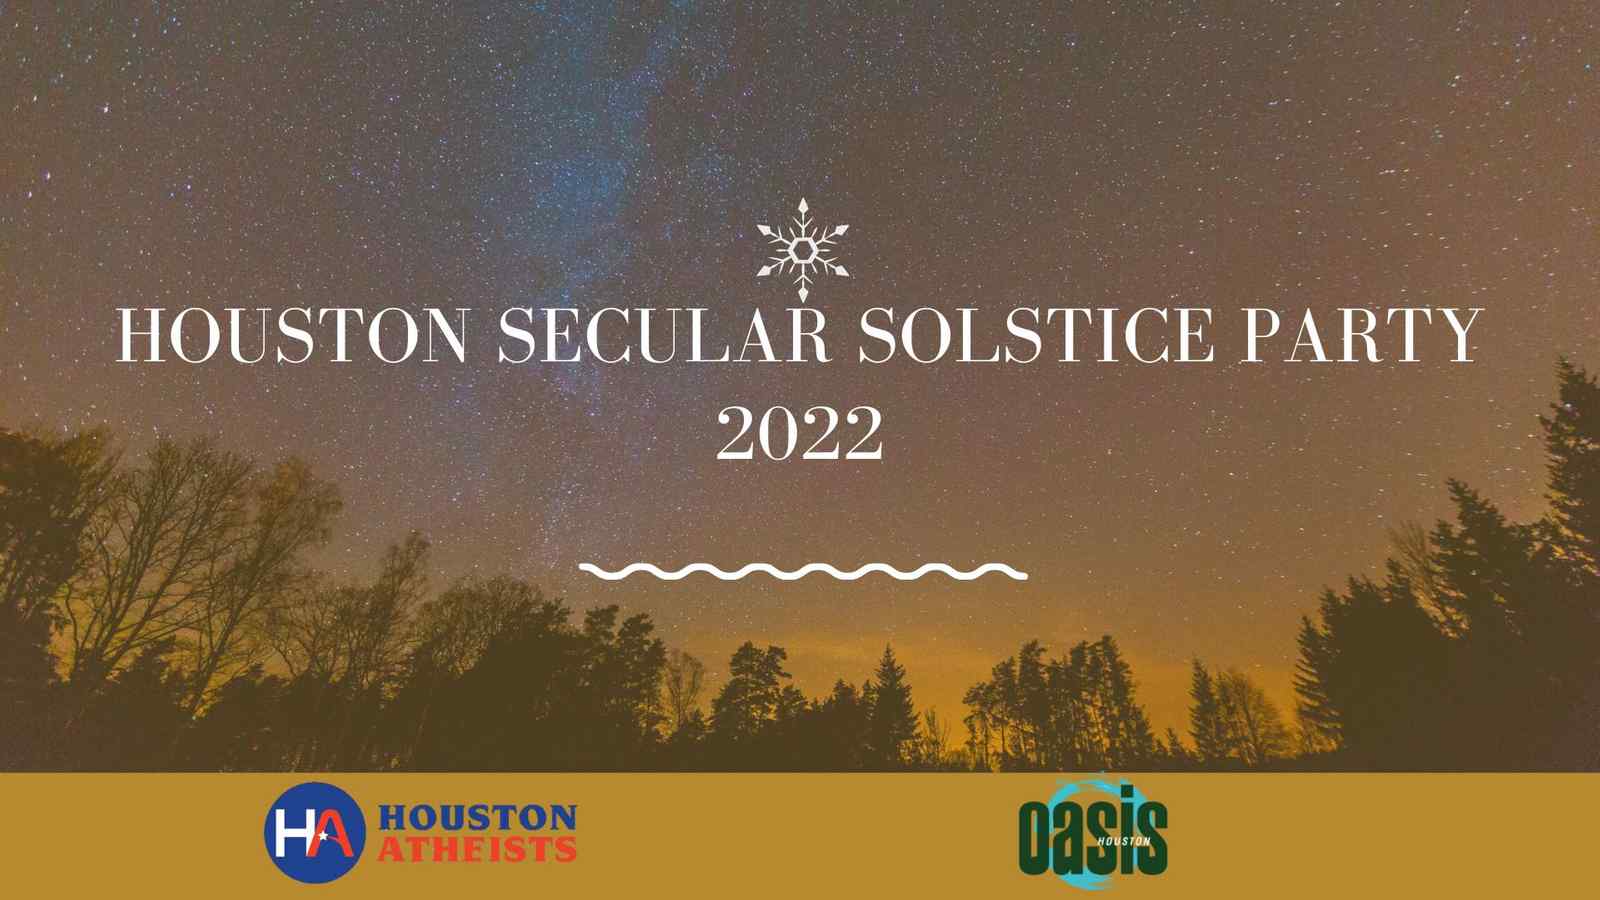 Secular Solstice Party 2022 & HA 20th Anniversary